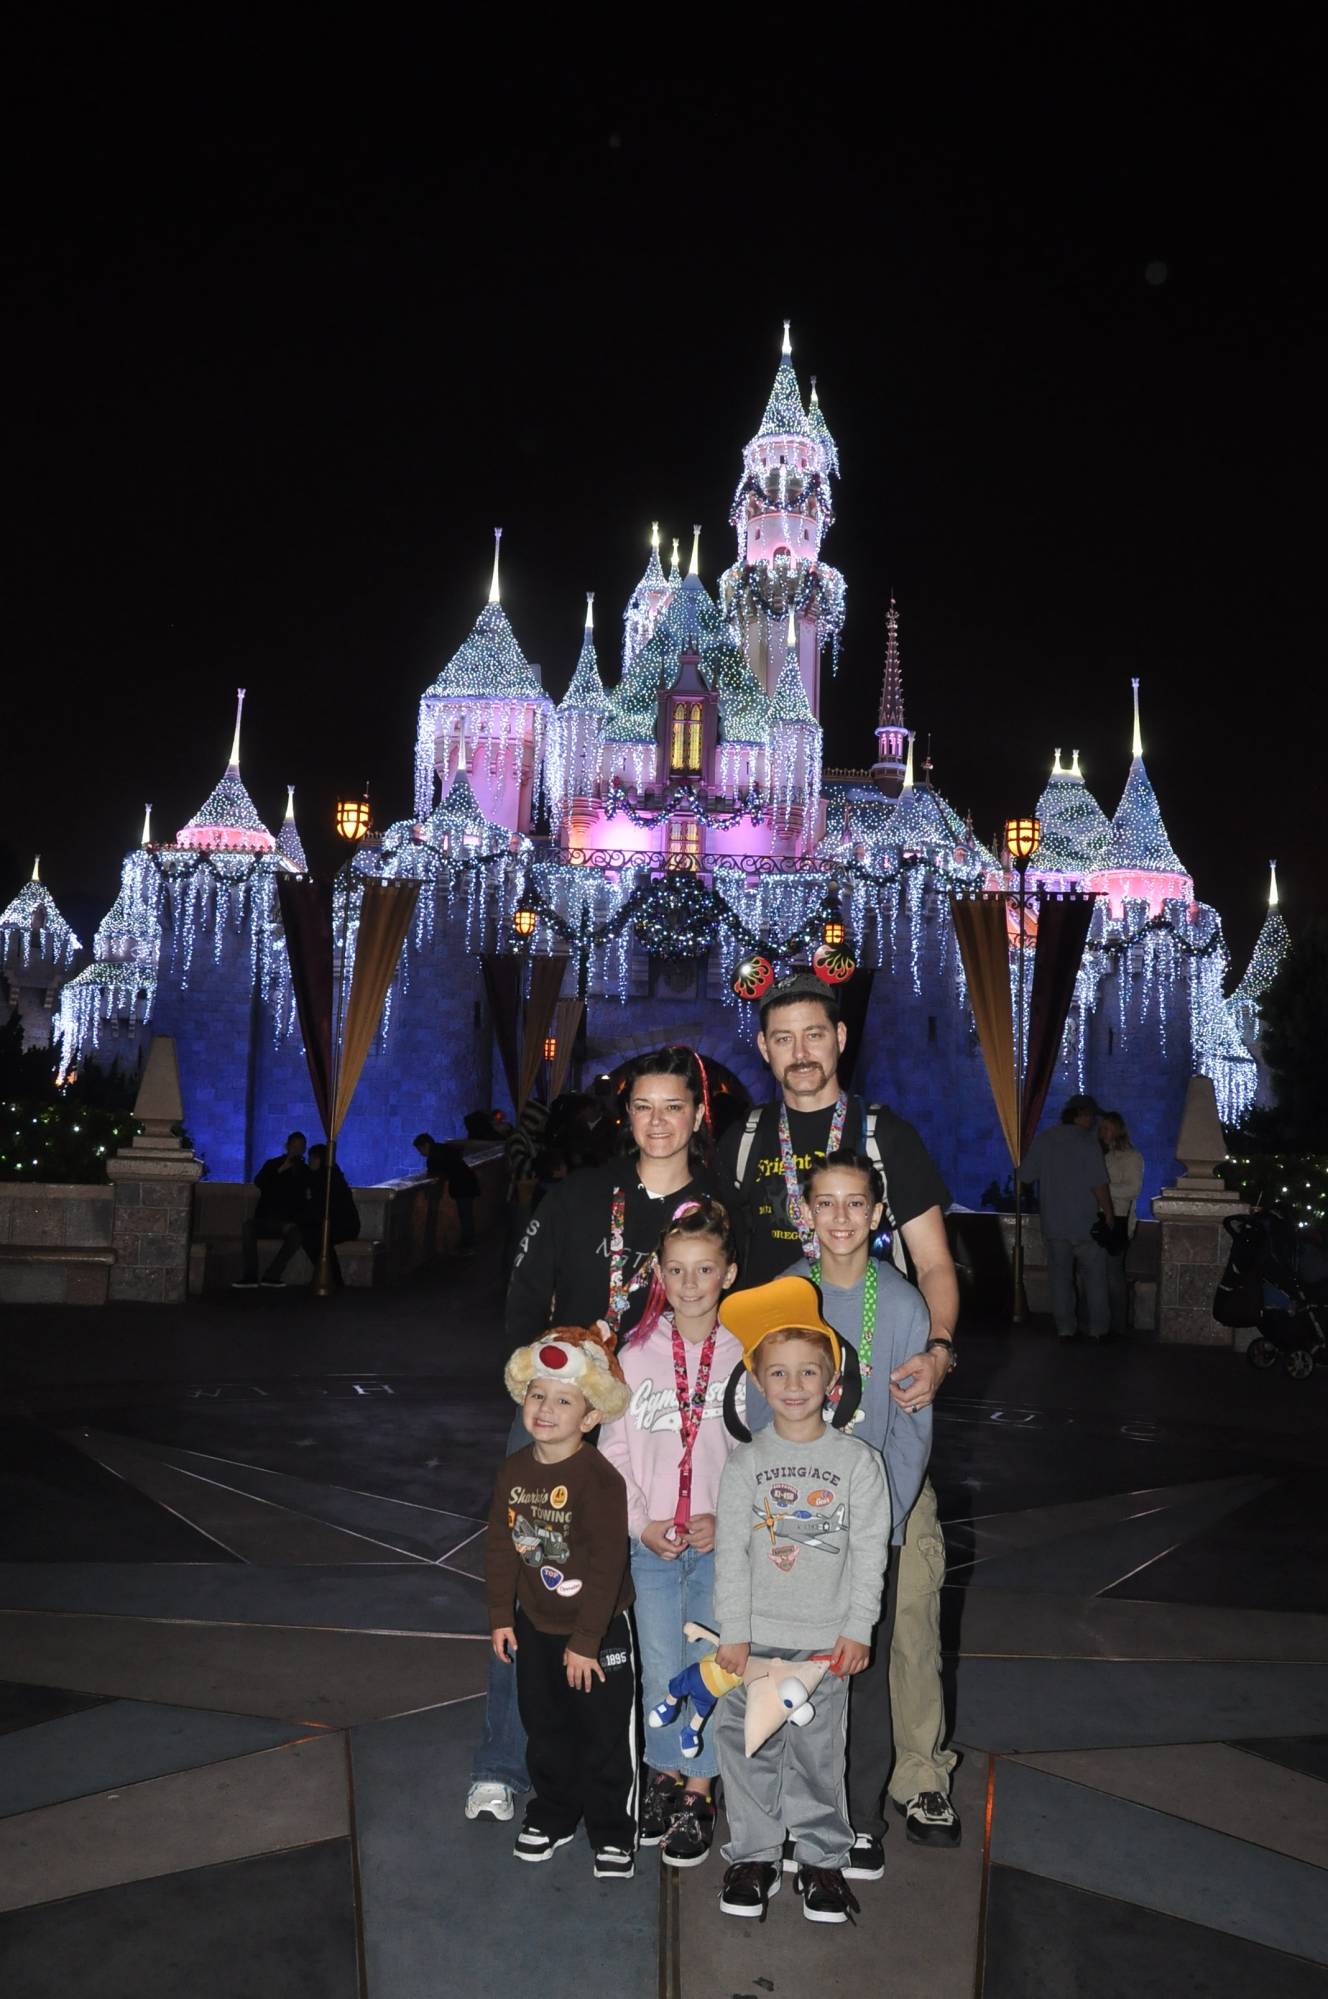 Da Haydens in Disneyland 2010